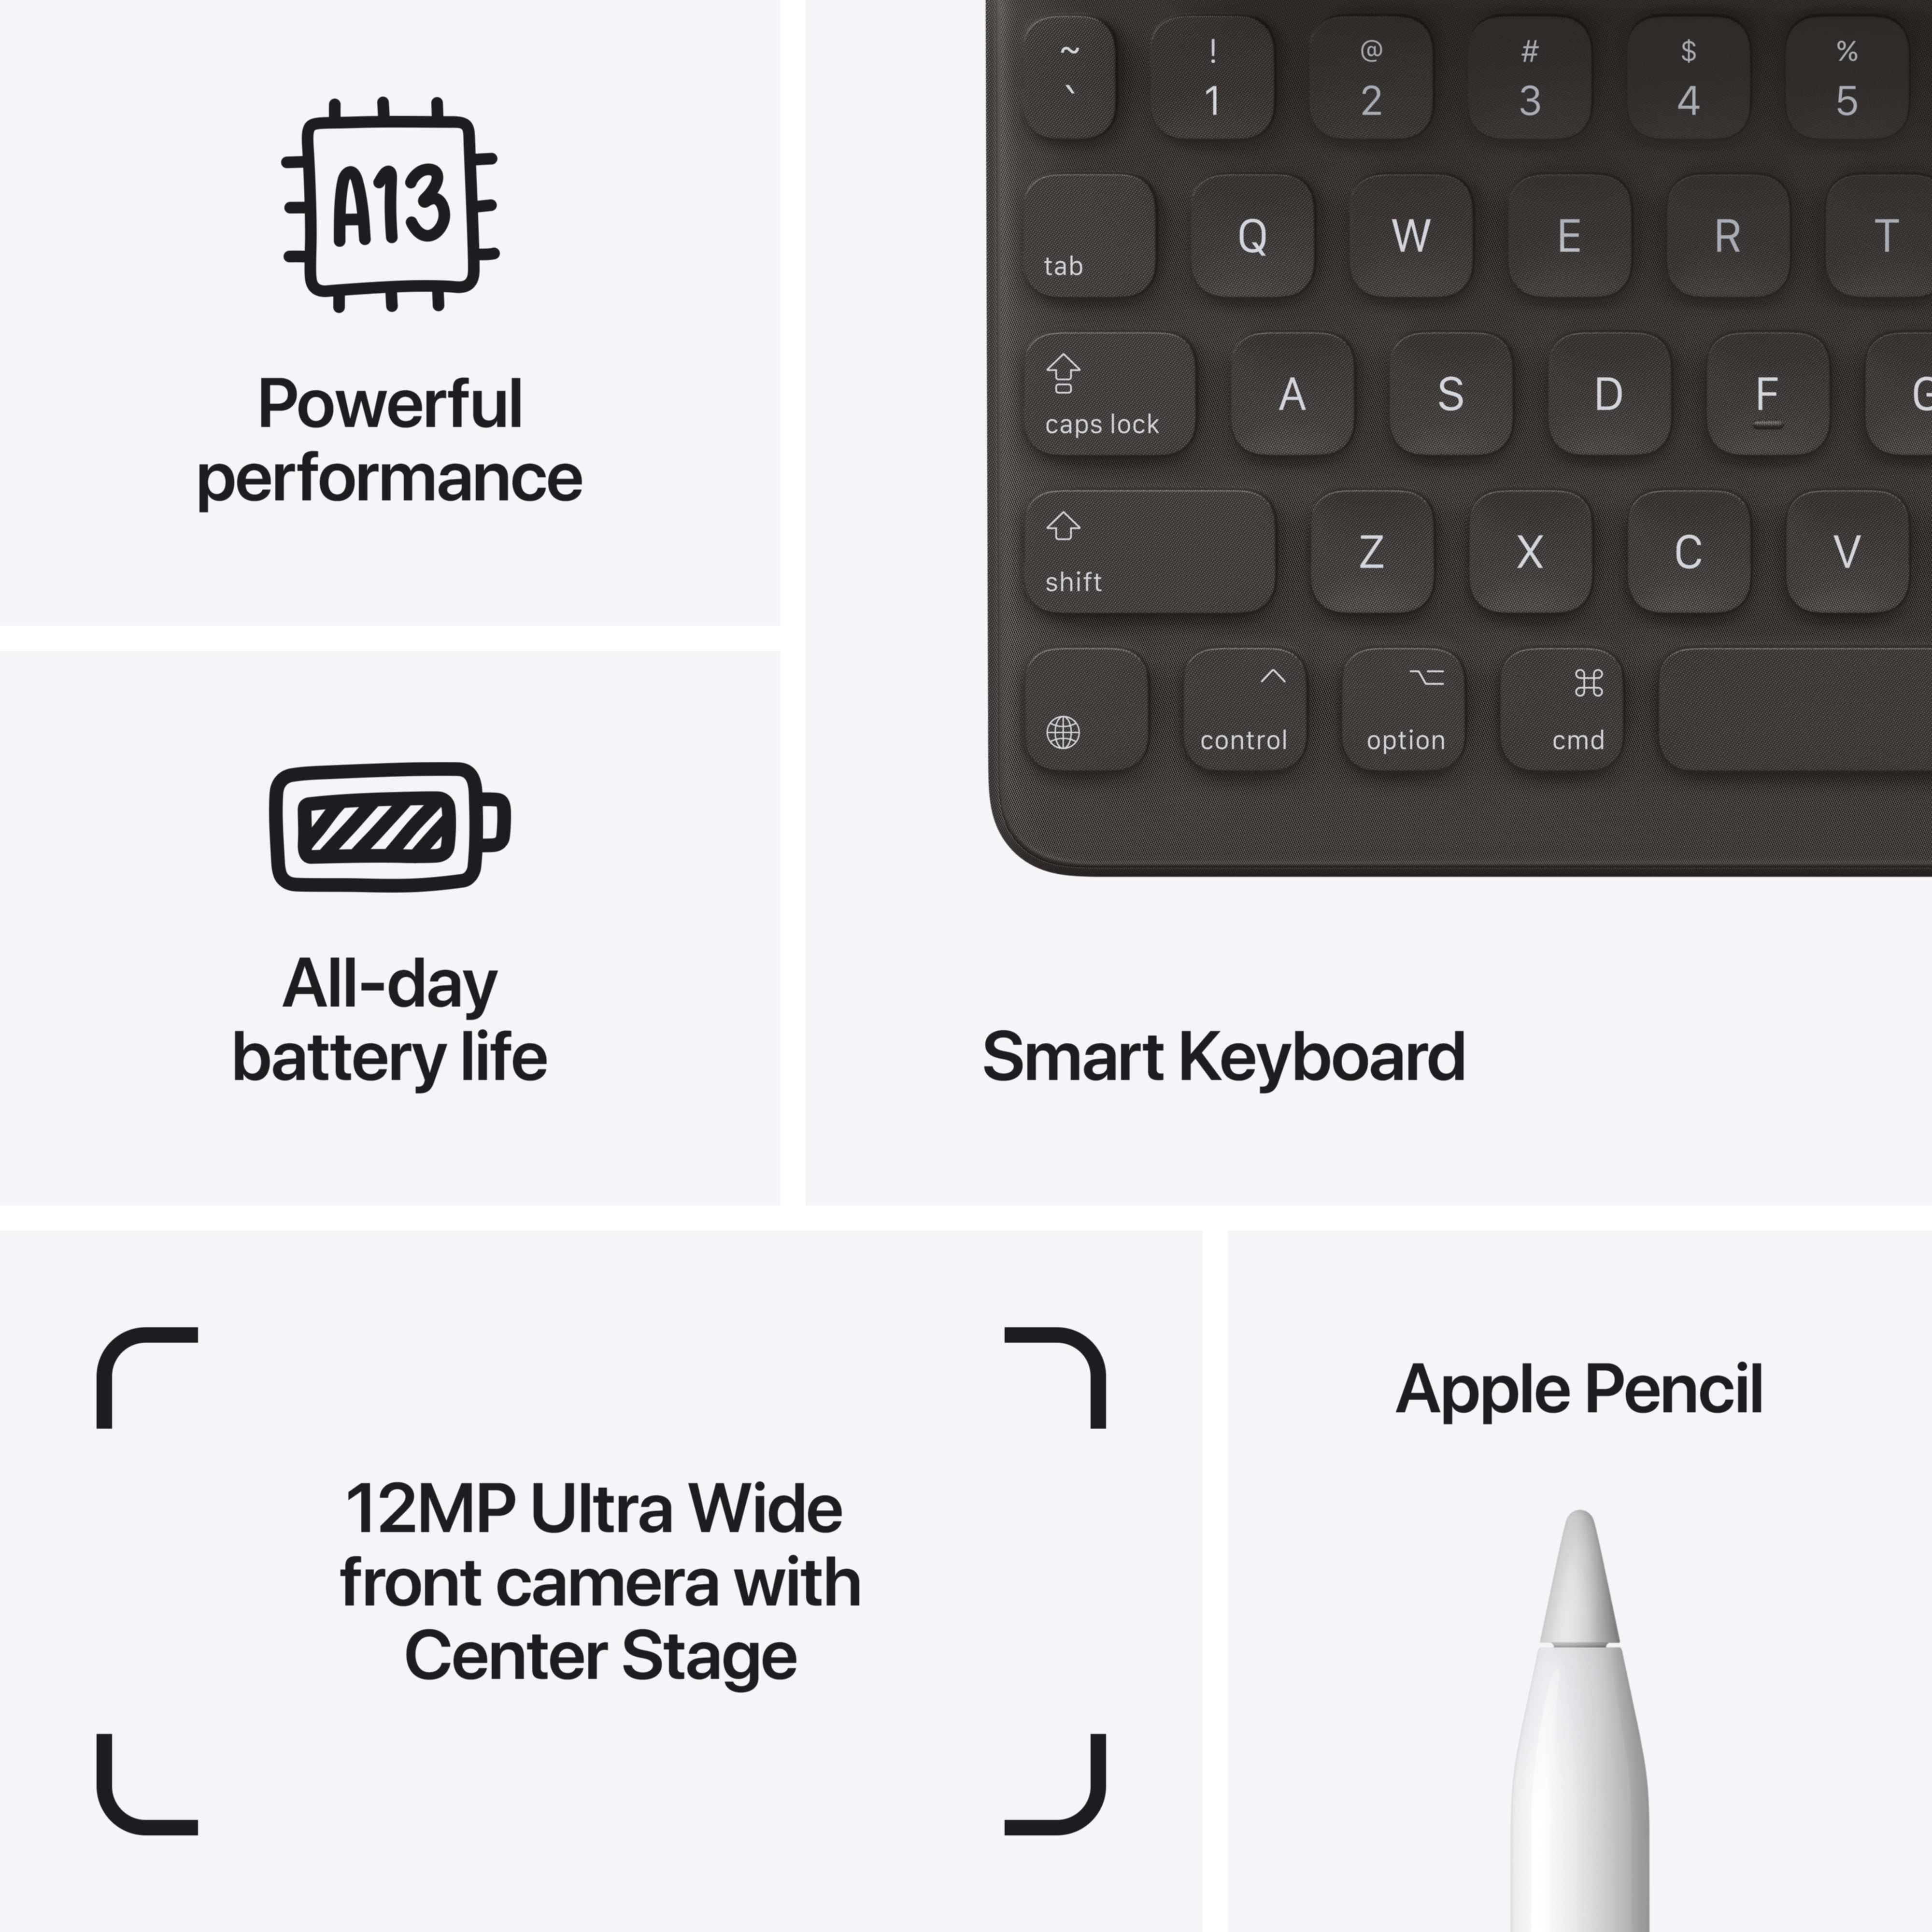 2021 Apple 10.2-inch iPad Wi-Fi 64GB - Space Gray (9th Generation)